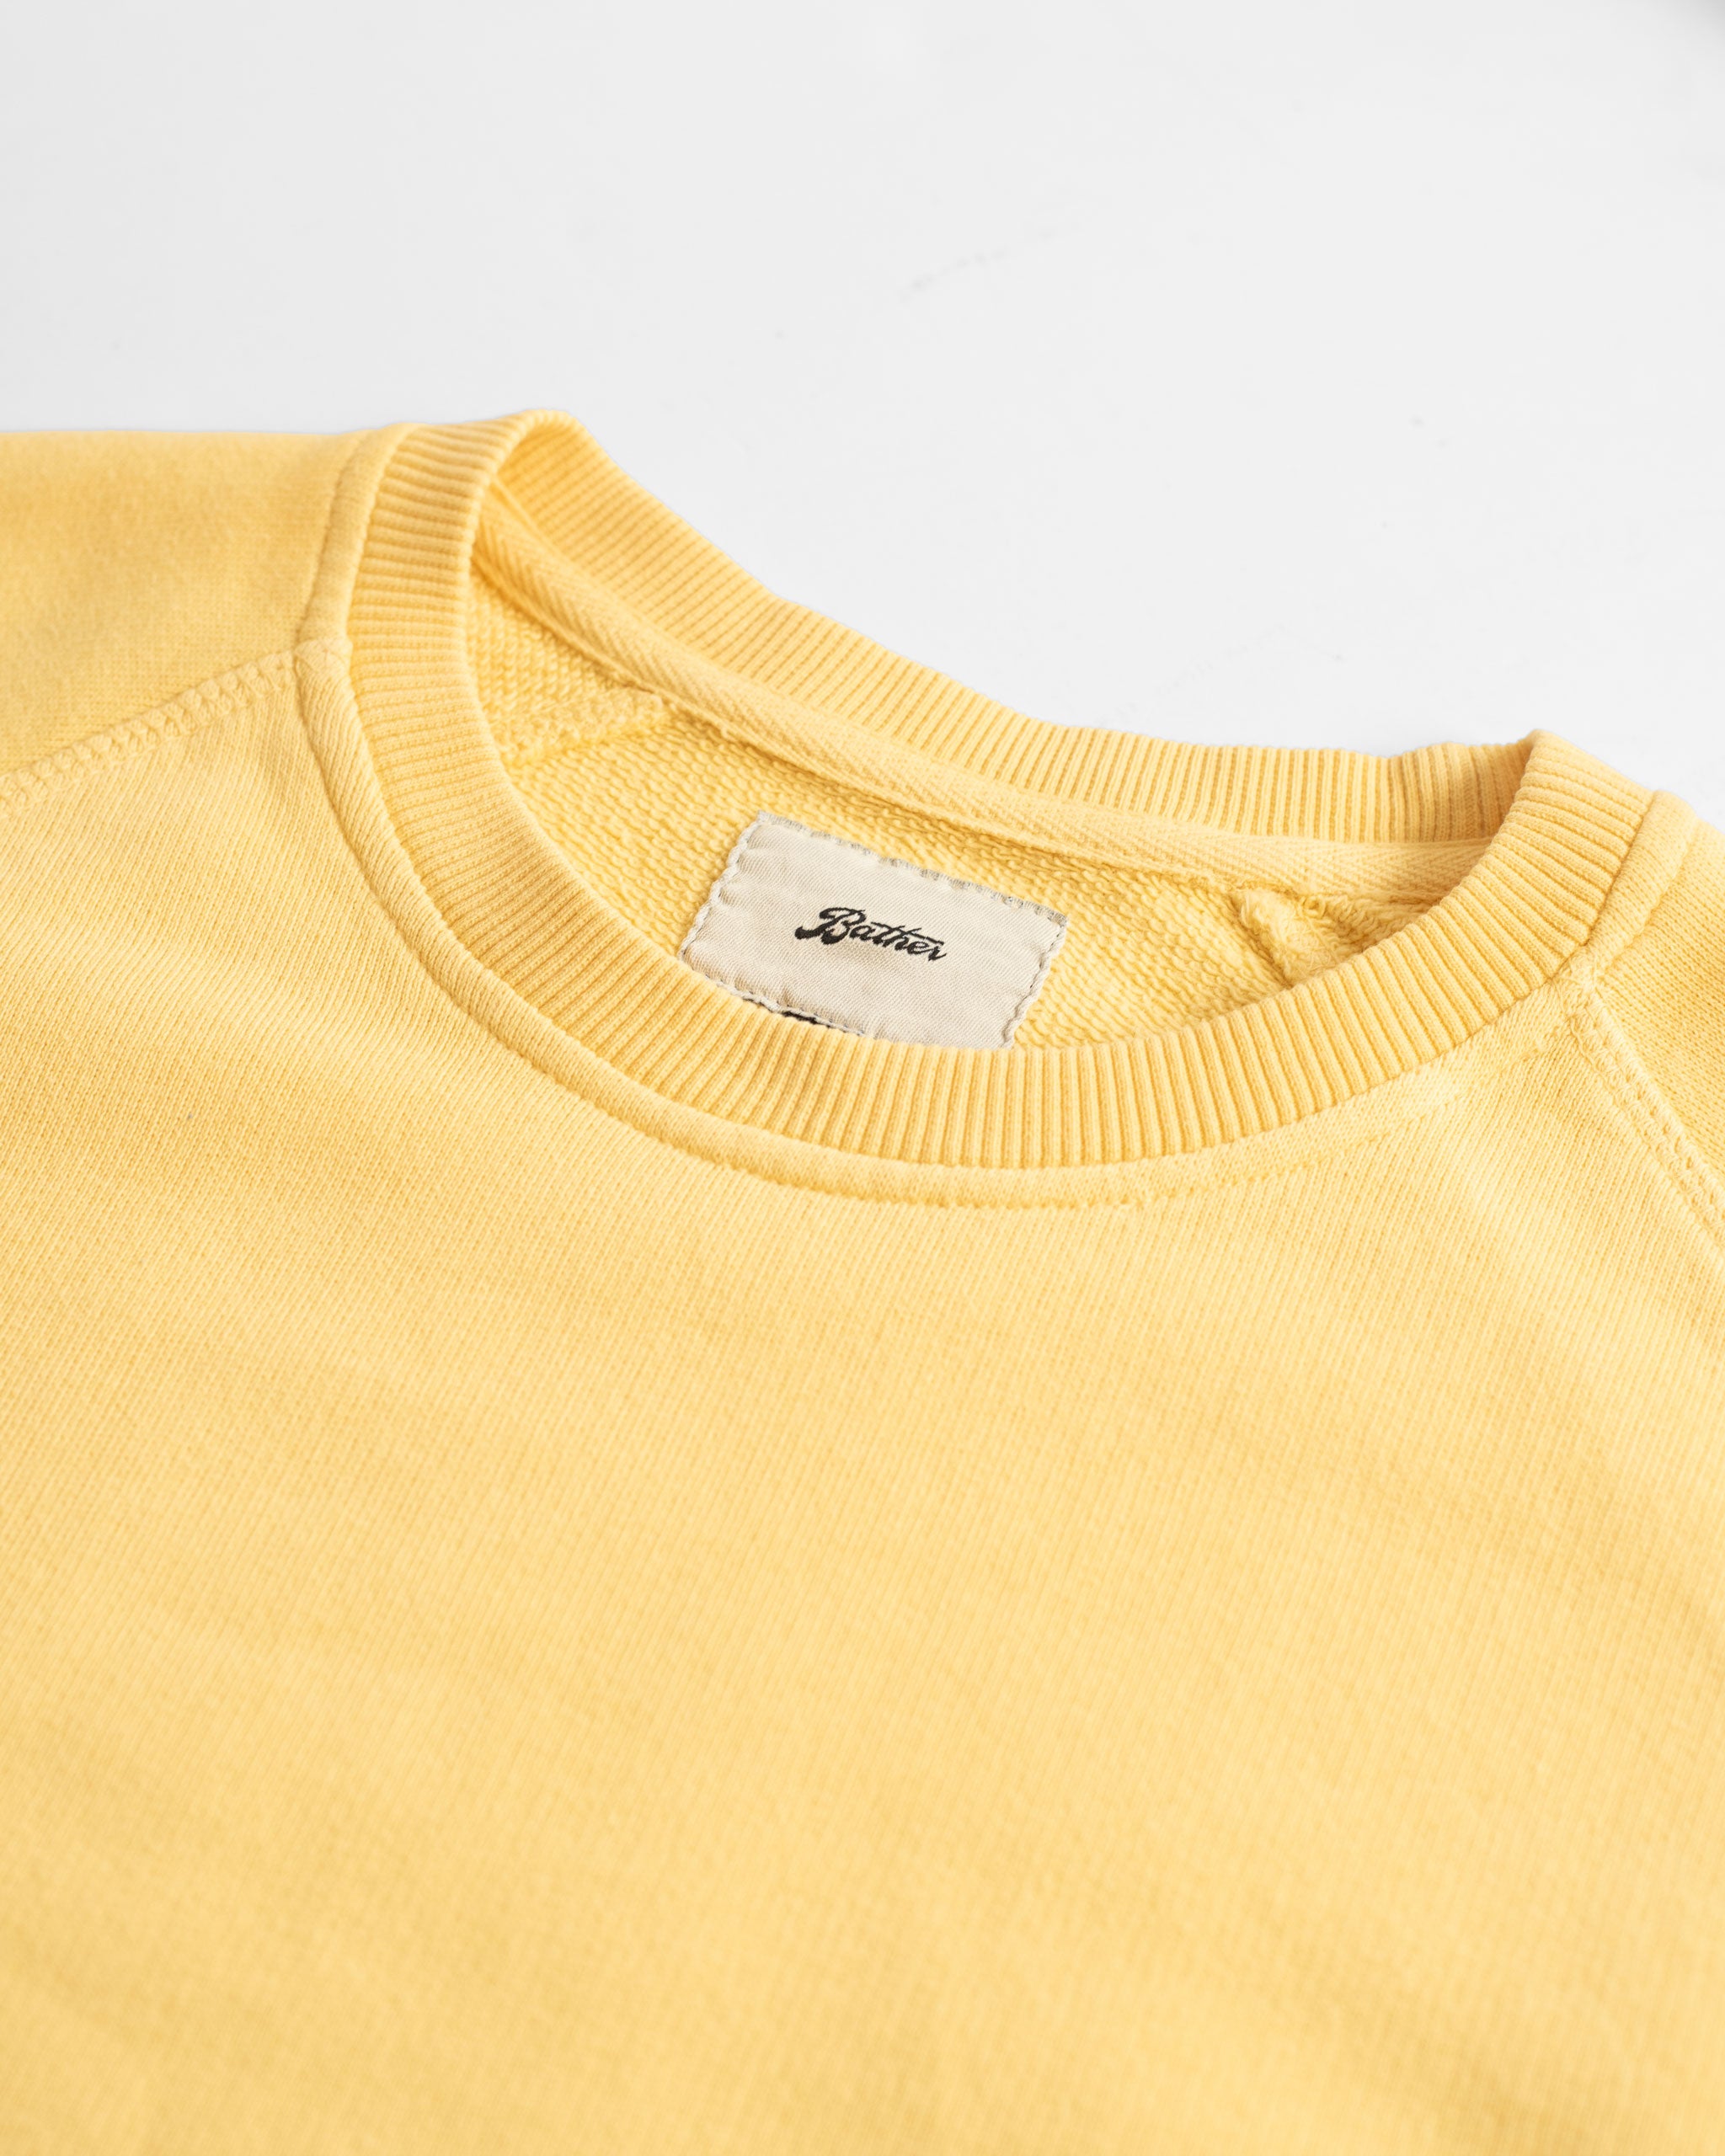 Collar close up of Canary Yellow French Terry Cotton Raglan Sleeve Crewneck Sweatshirt